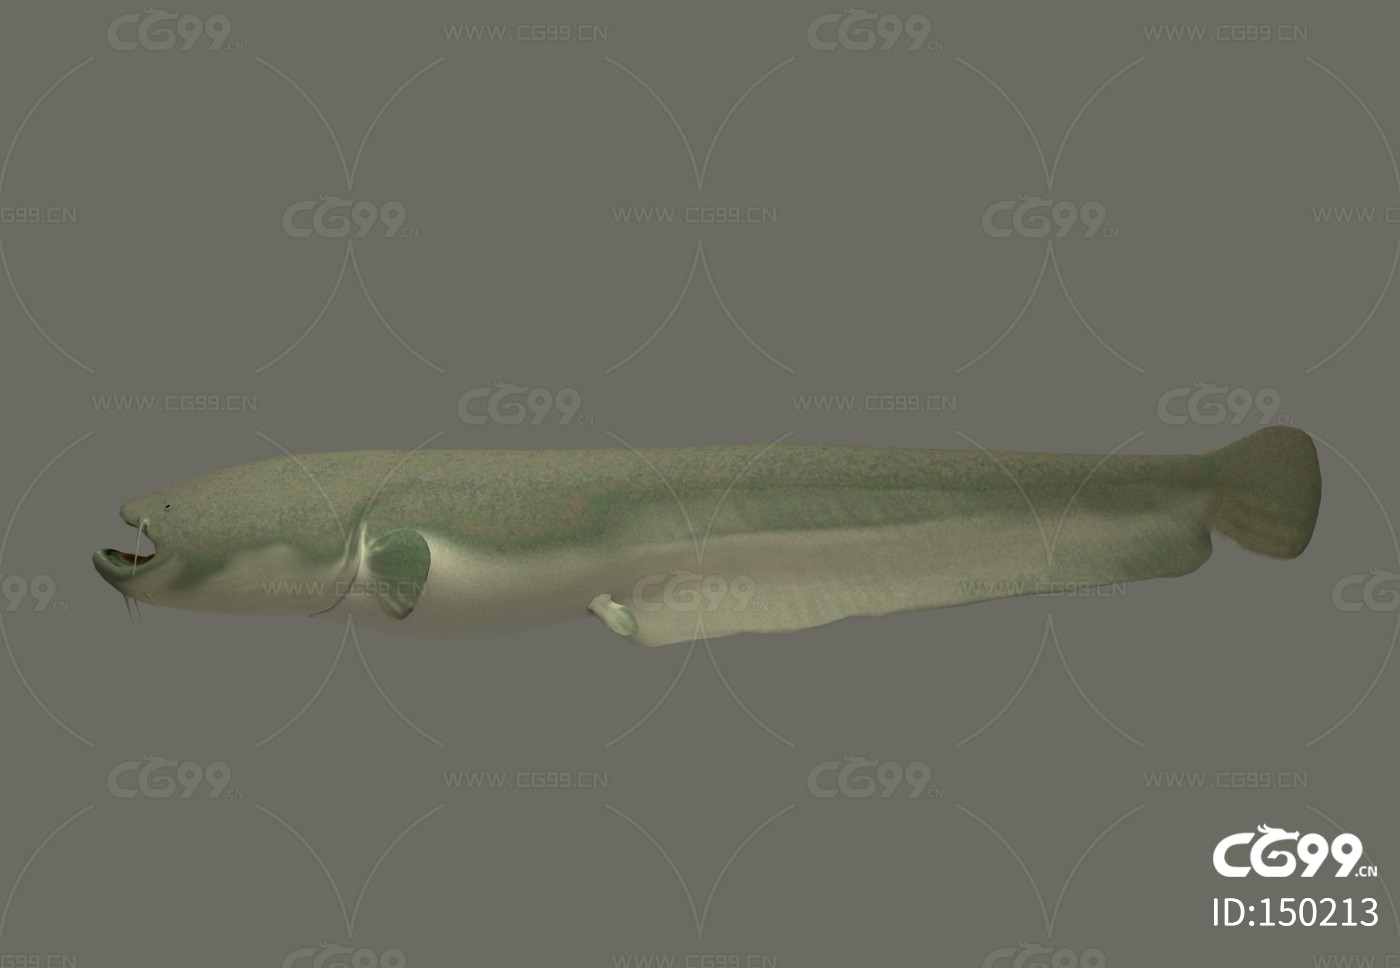 用户照片-Siluriformes-鲇形目-喵潜AI鱼类辨识 FISH ID - 你的在线鱼书